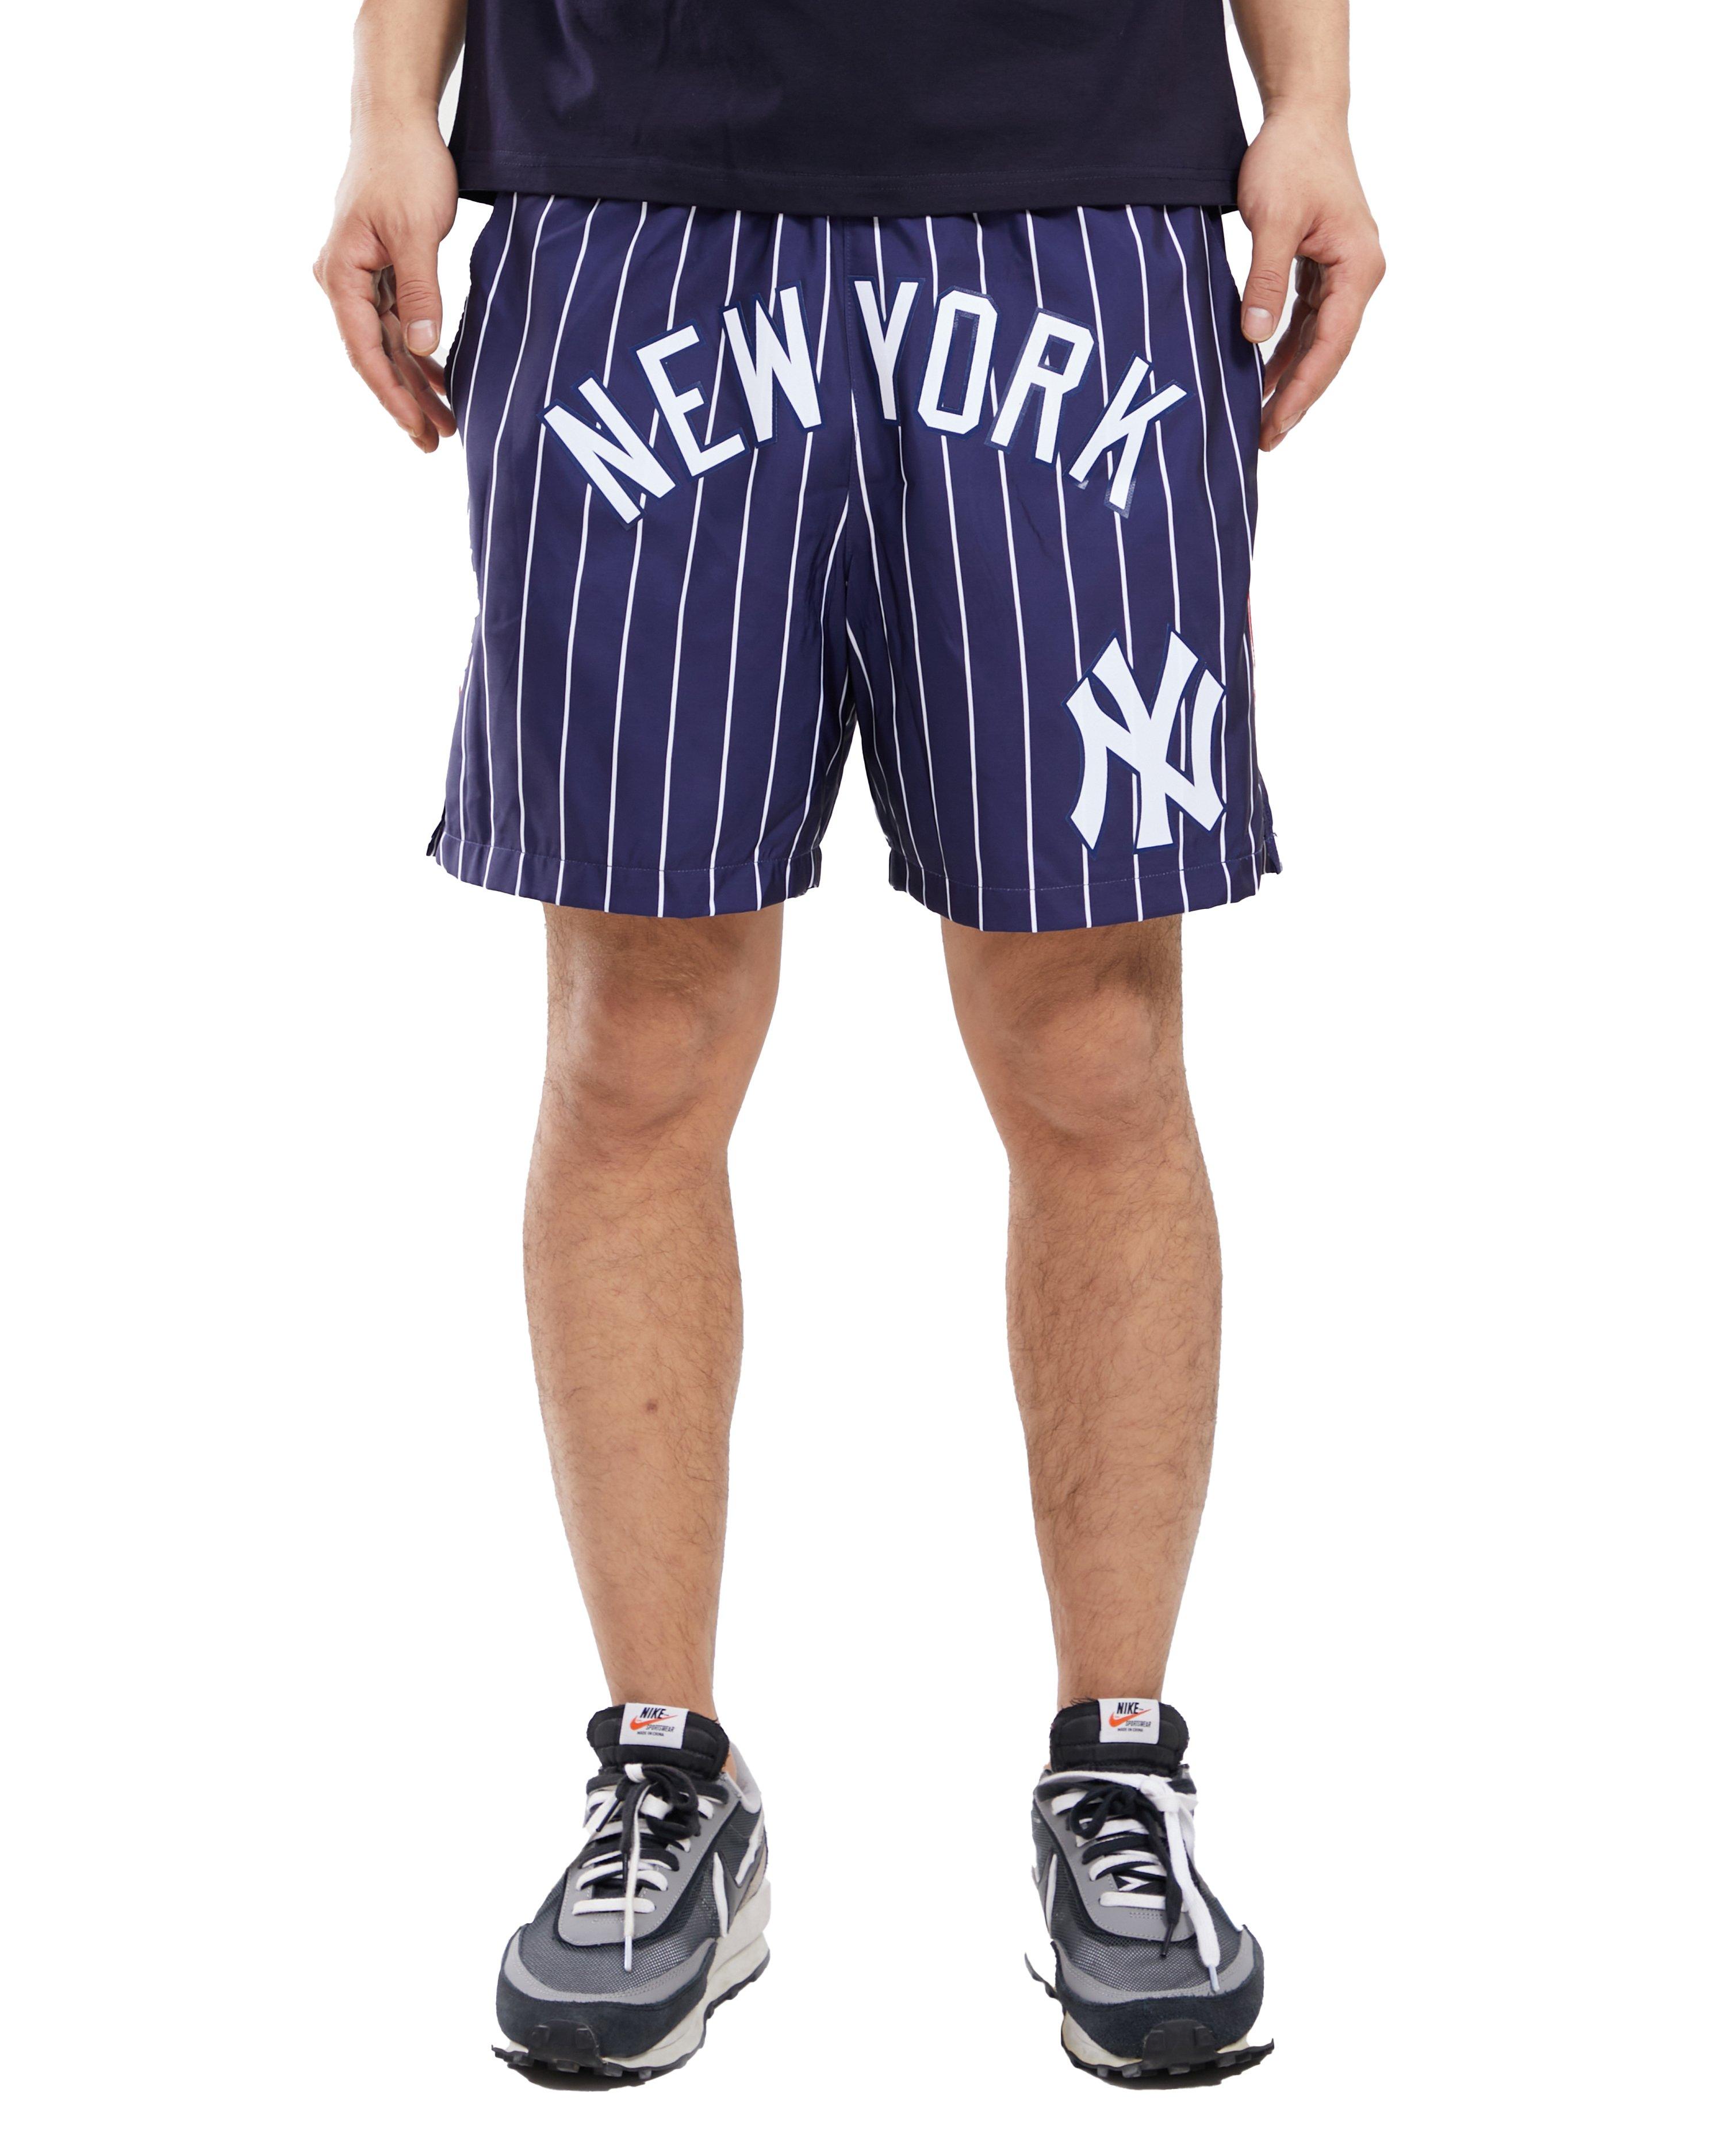 New York Yankees Loudmouth Women's Pinstripe Mini Shorts - Navy